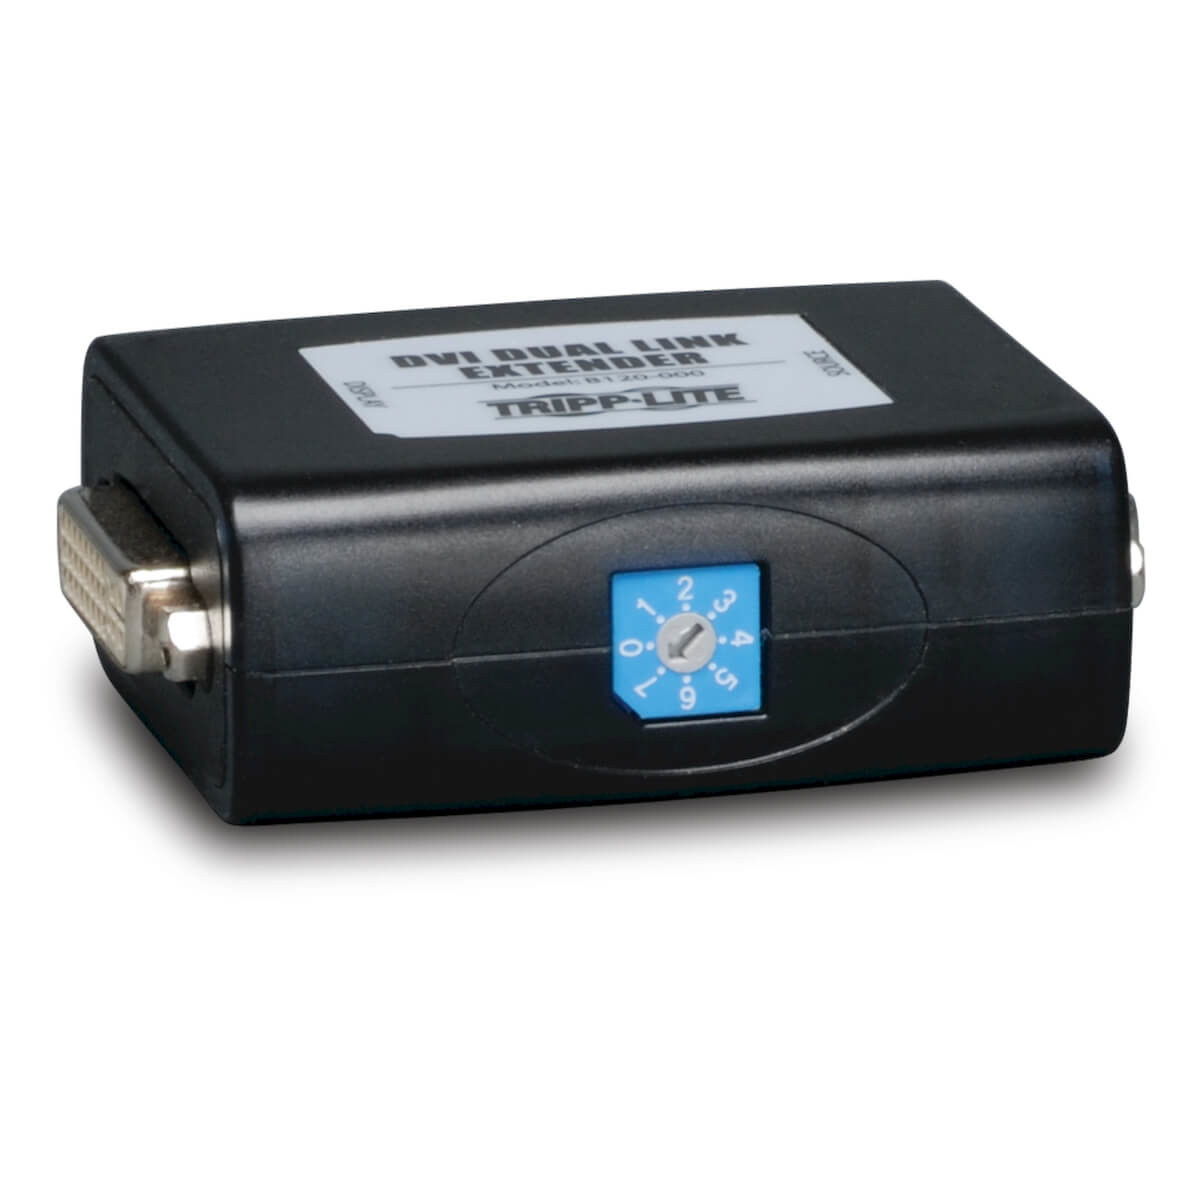 Tripp Lite B120-000 Ecualizador Extensor DVI, Repetidor de Video de Doble Enlace, 2560 x 1600 @ 60Hz (DVI H/H), hasta 45.7 m [150 pies]